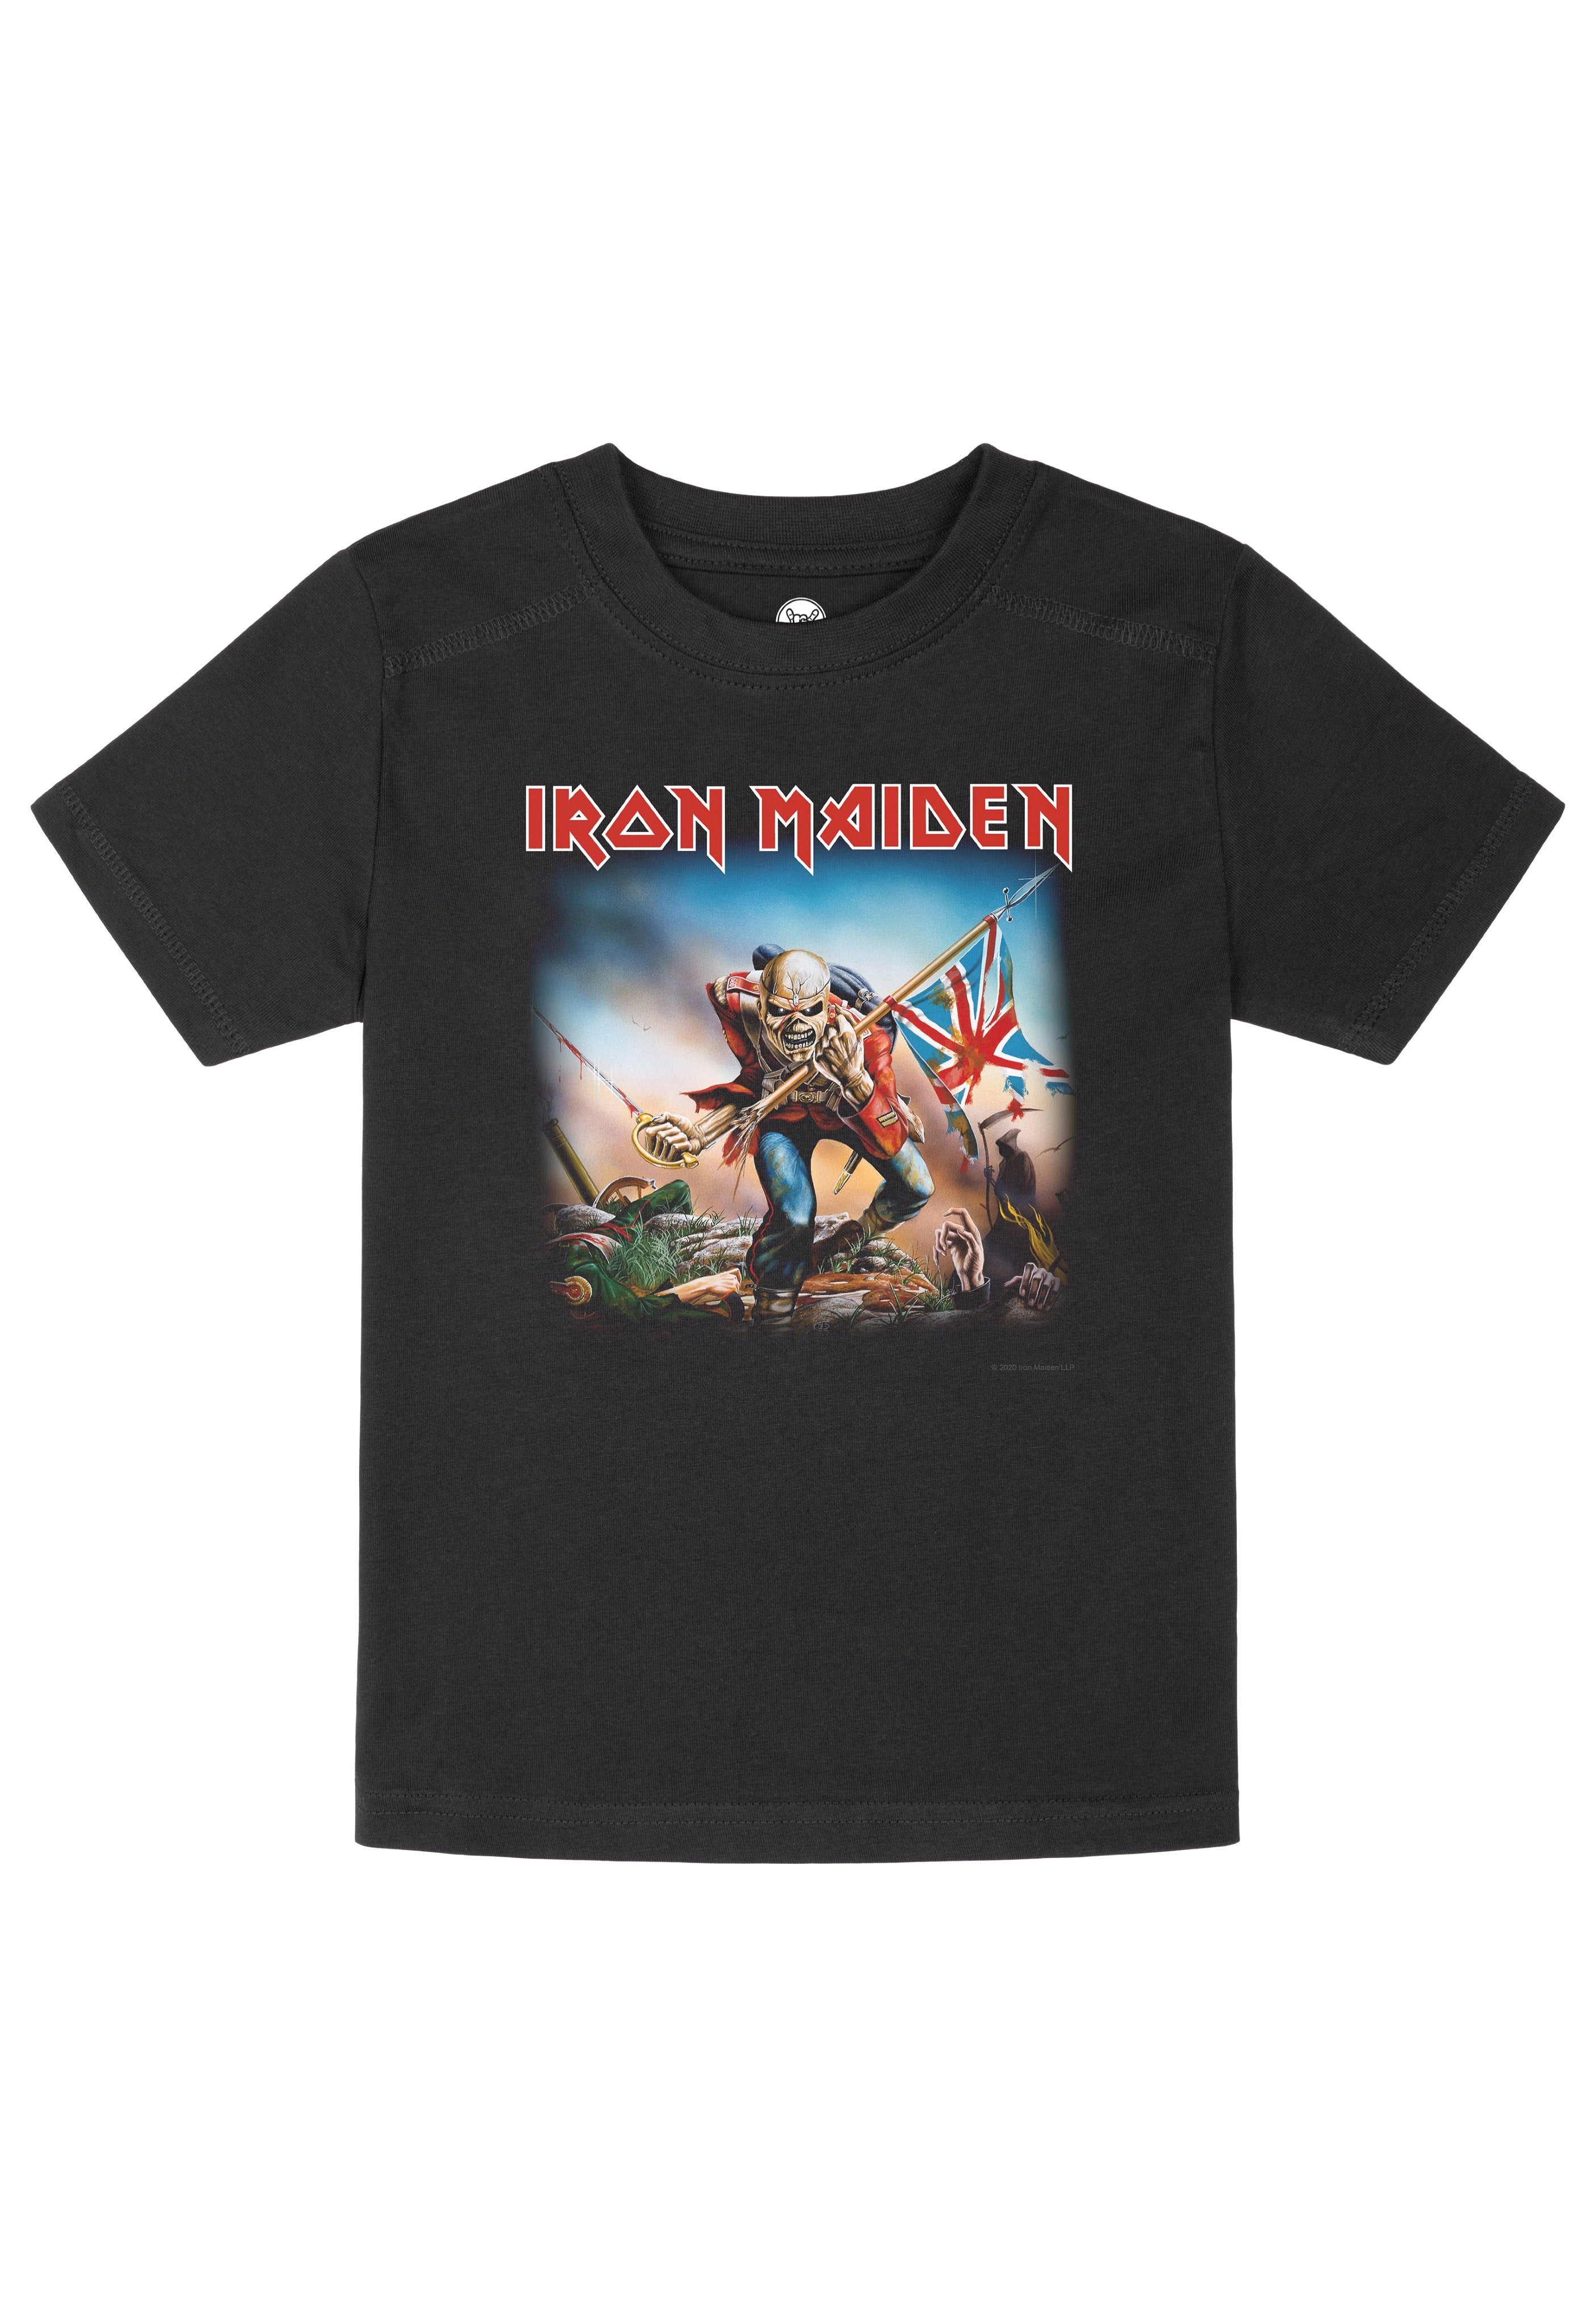 Iron Maiden - Trooper Kids Black/Multicolored - T-Shirt